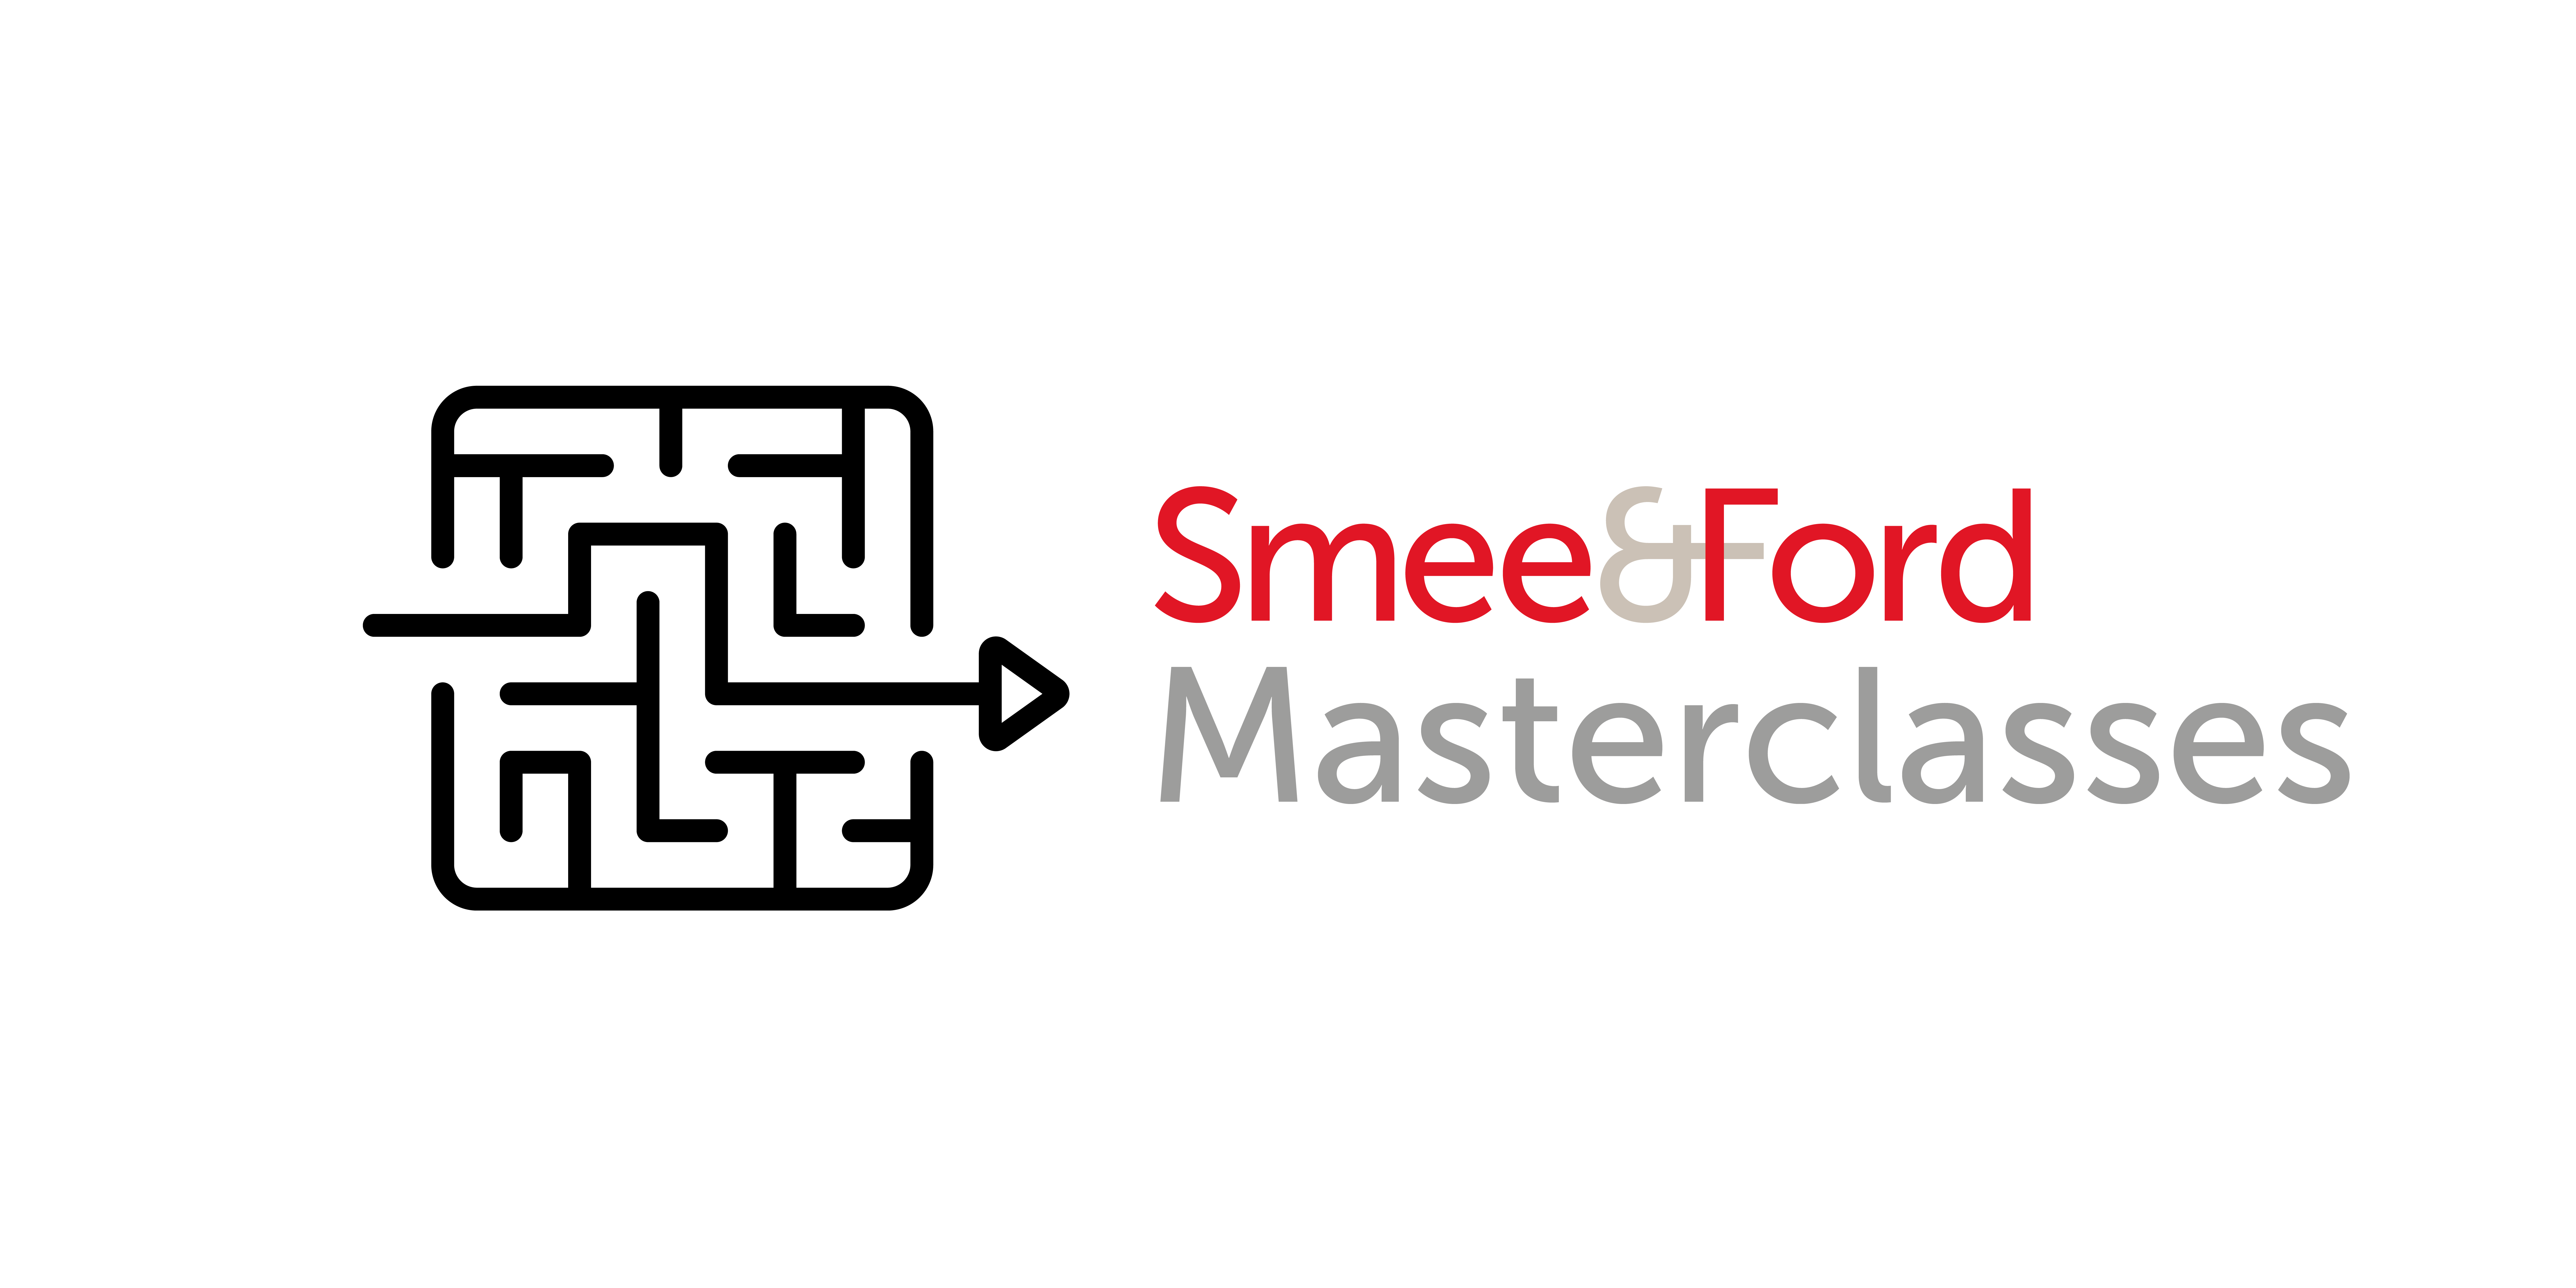 S&F Masterclass Logo 2 01